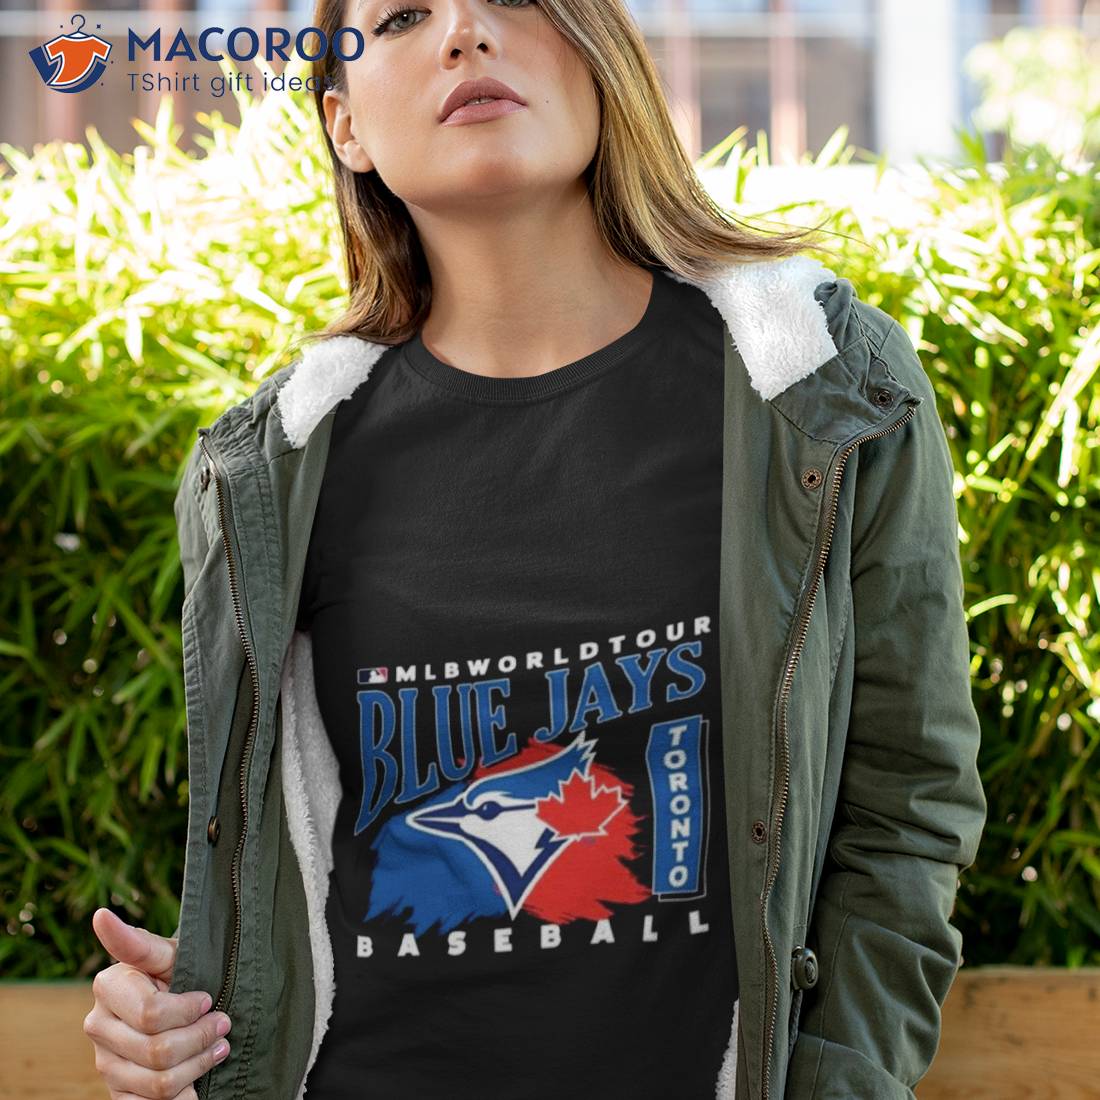 MLB World Tour Toronto Blue Jays logo T-shirt, hoodie, sweater